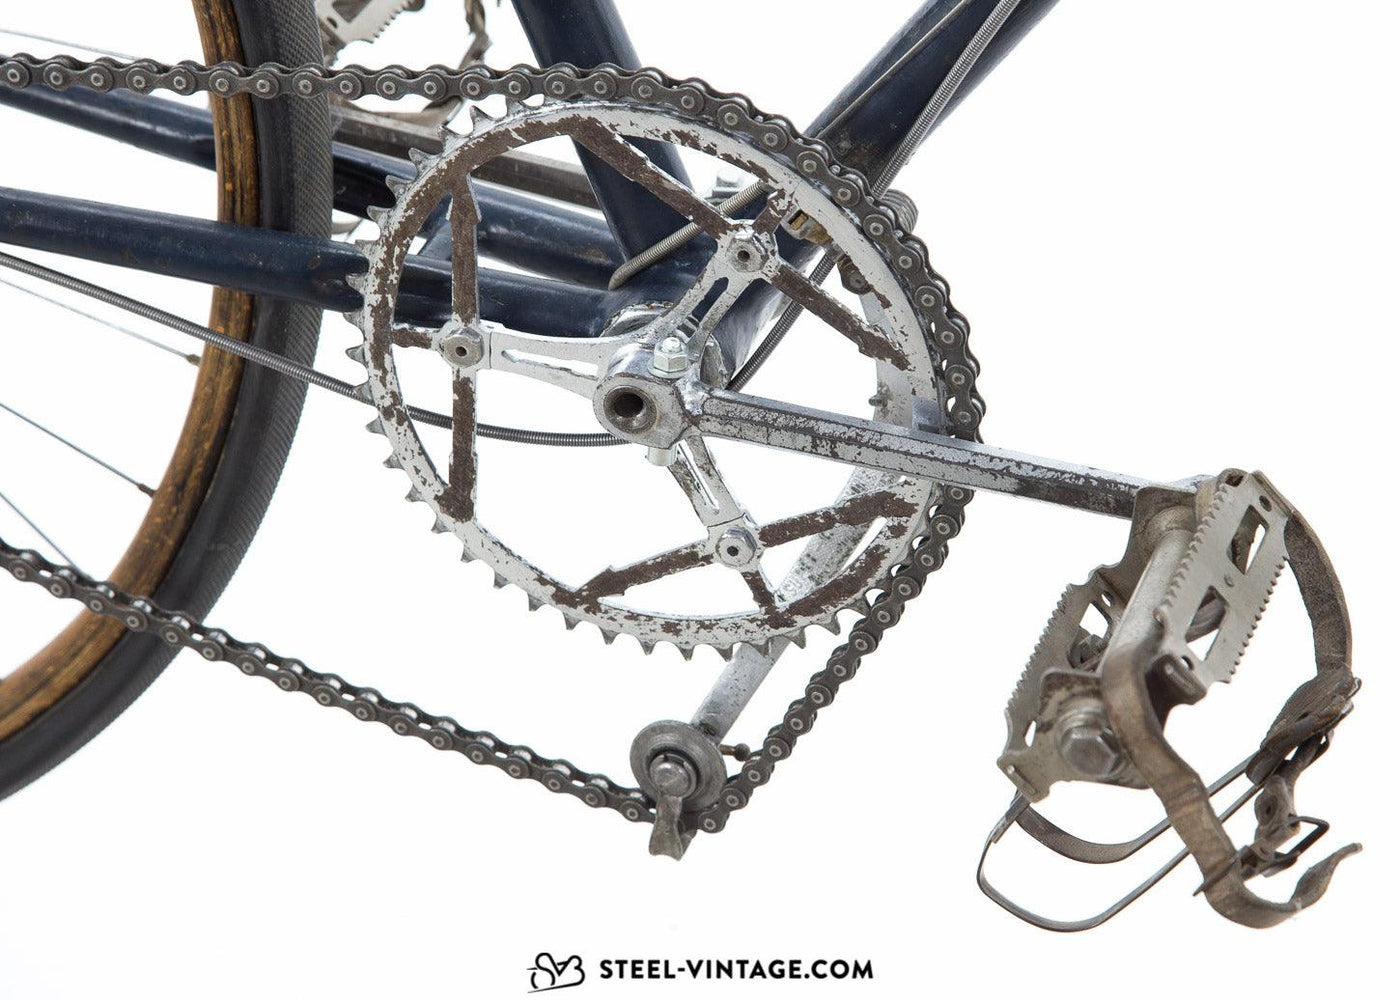 Roche Venissieux Osgear Super Champion 1930s | Steel Vintage Bikes